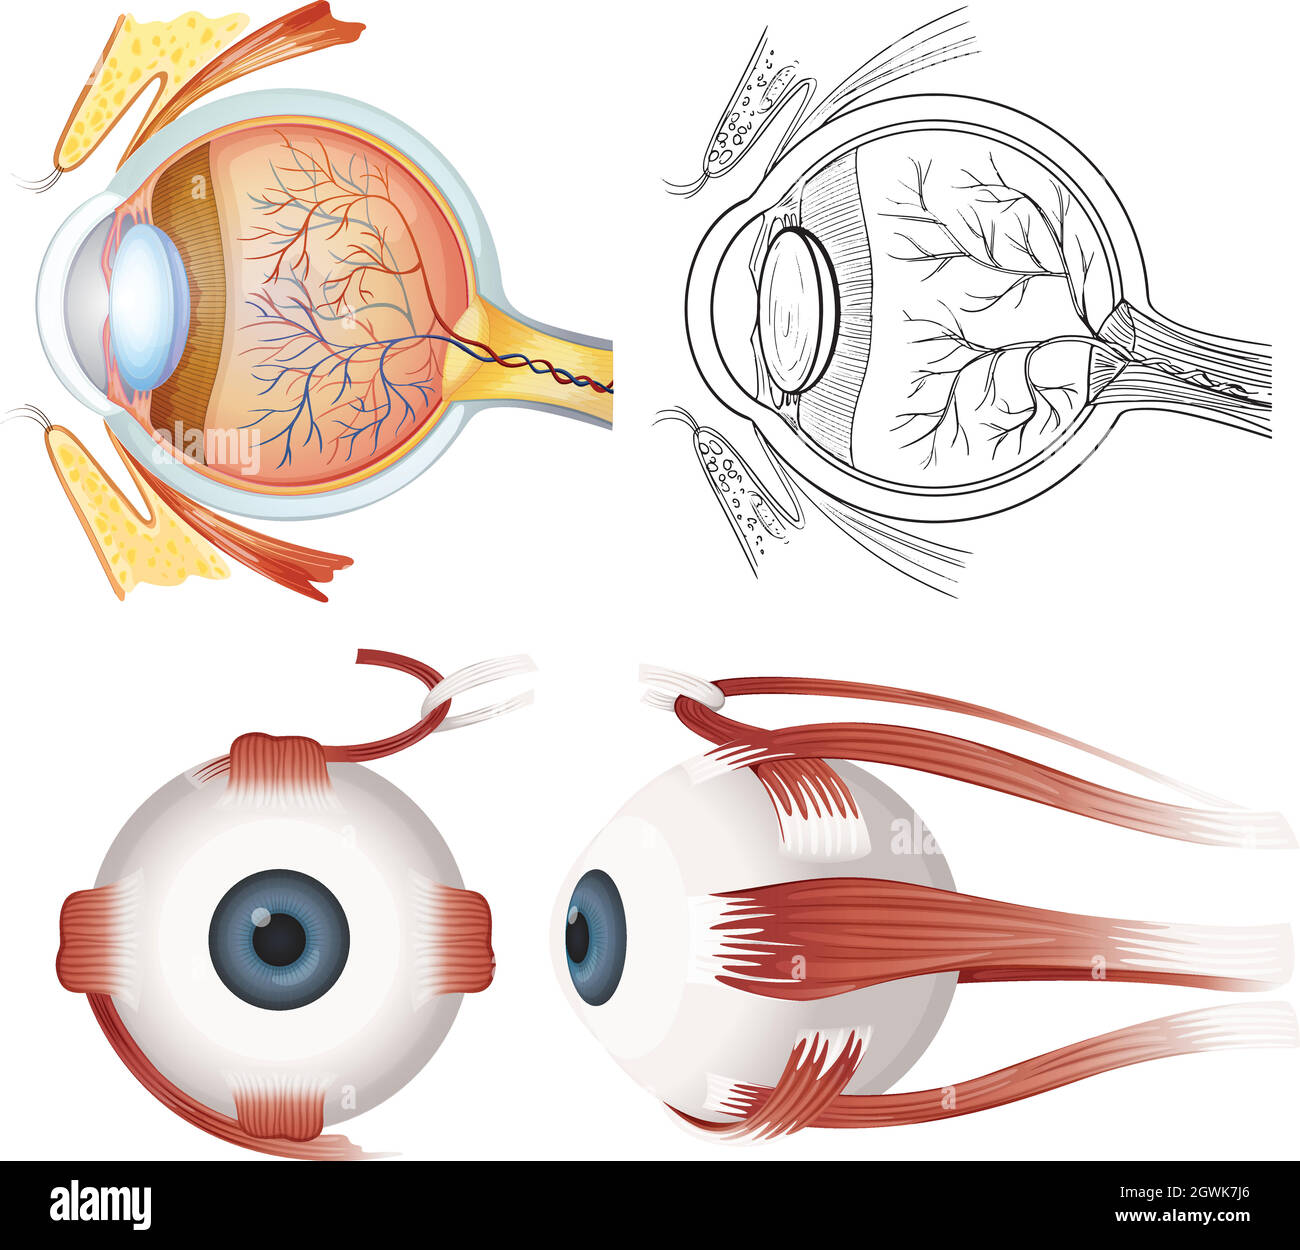 Anatomie des Auges Stock Vektor